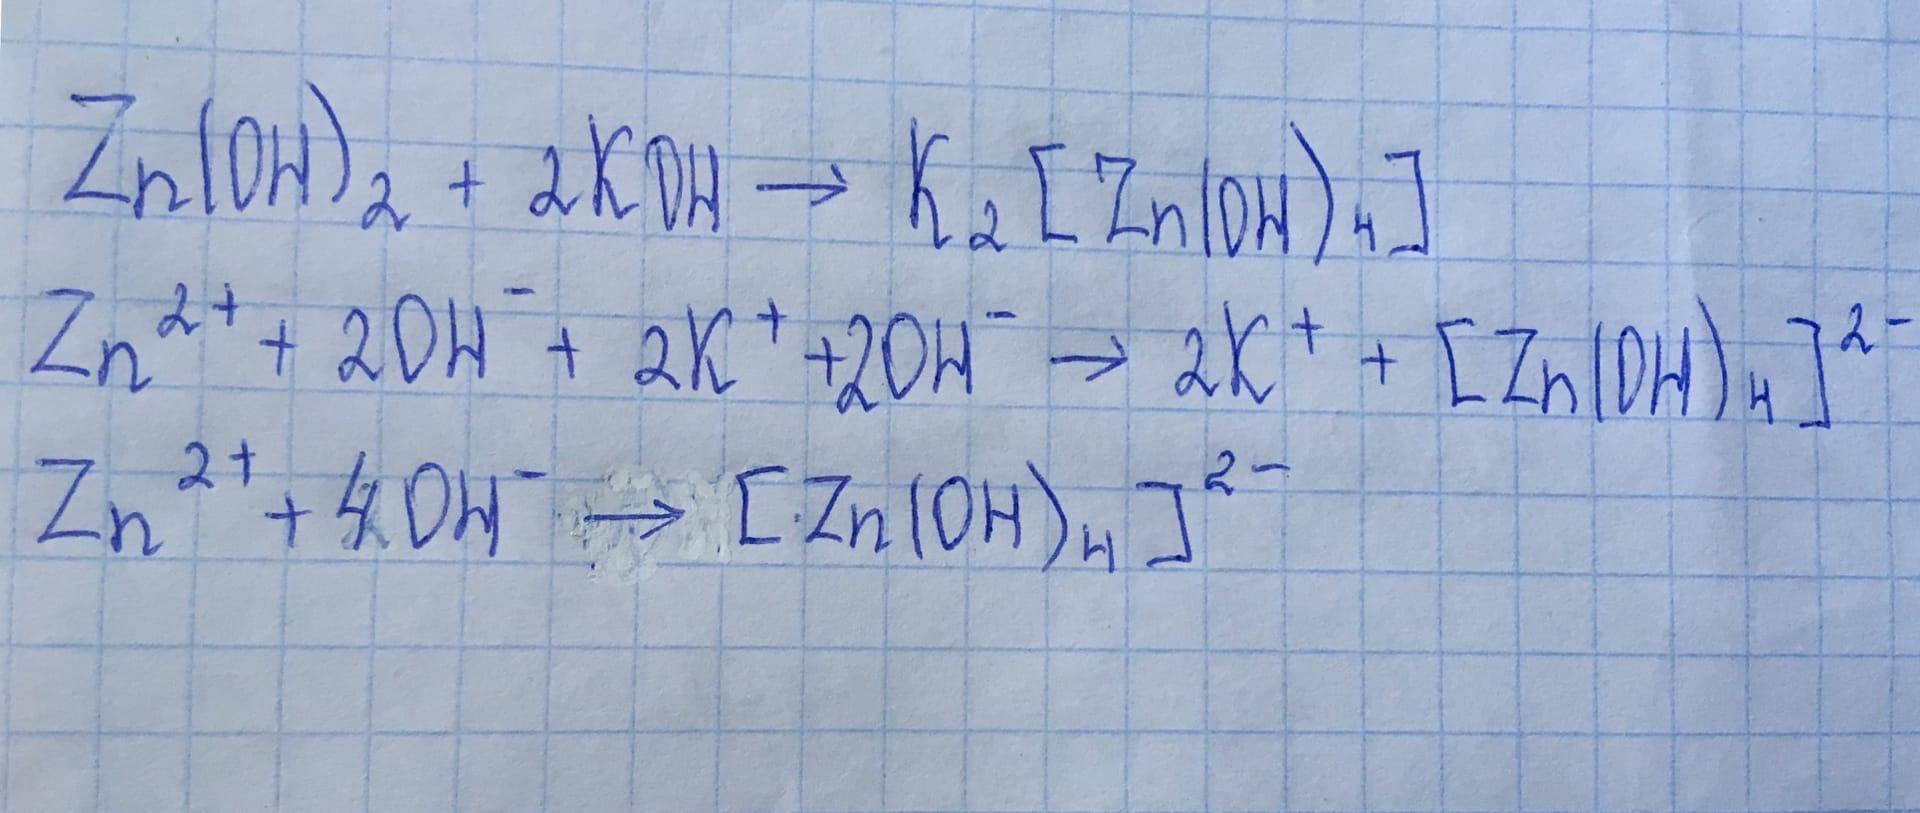 Zn oh 2 продукт реакции. ZN Oh 2 реакции. ZN Oh 2 уравнение реакции. ZN сокращенное ионное. ZN Oh 2 ионное уравнение.